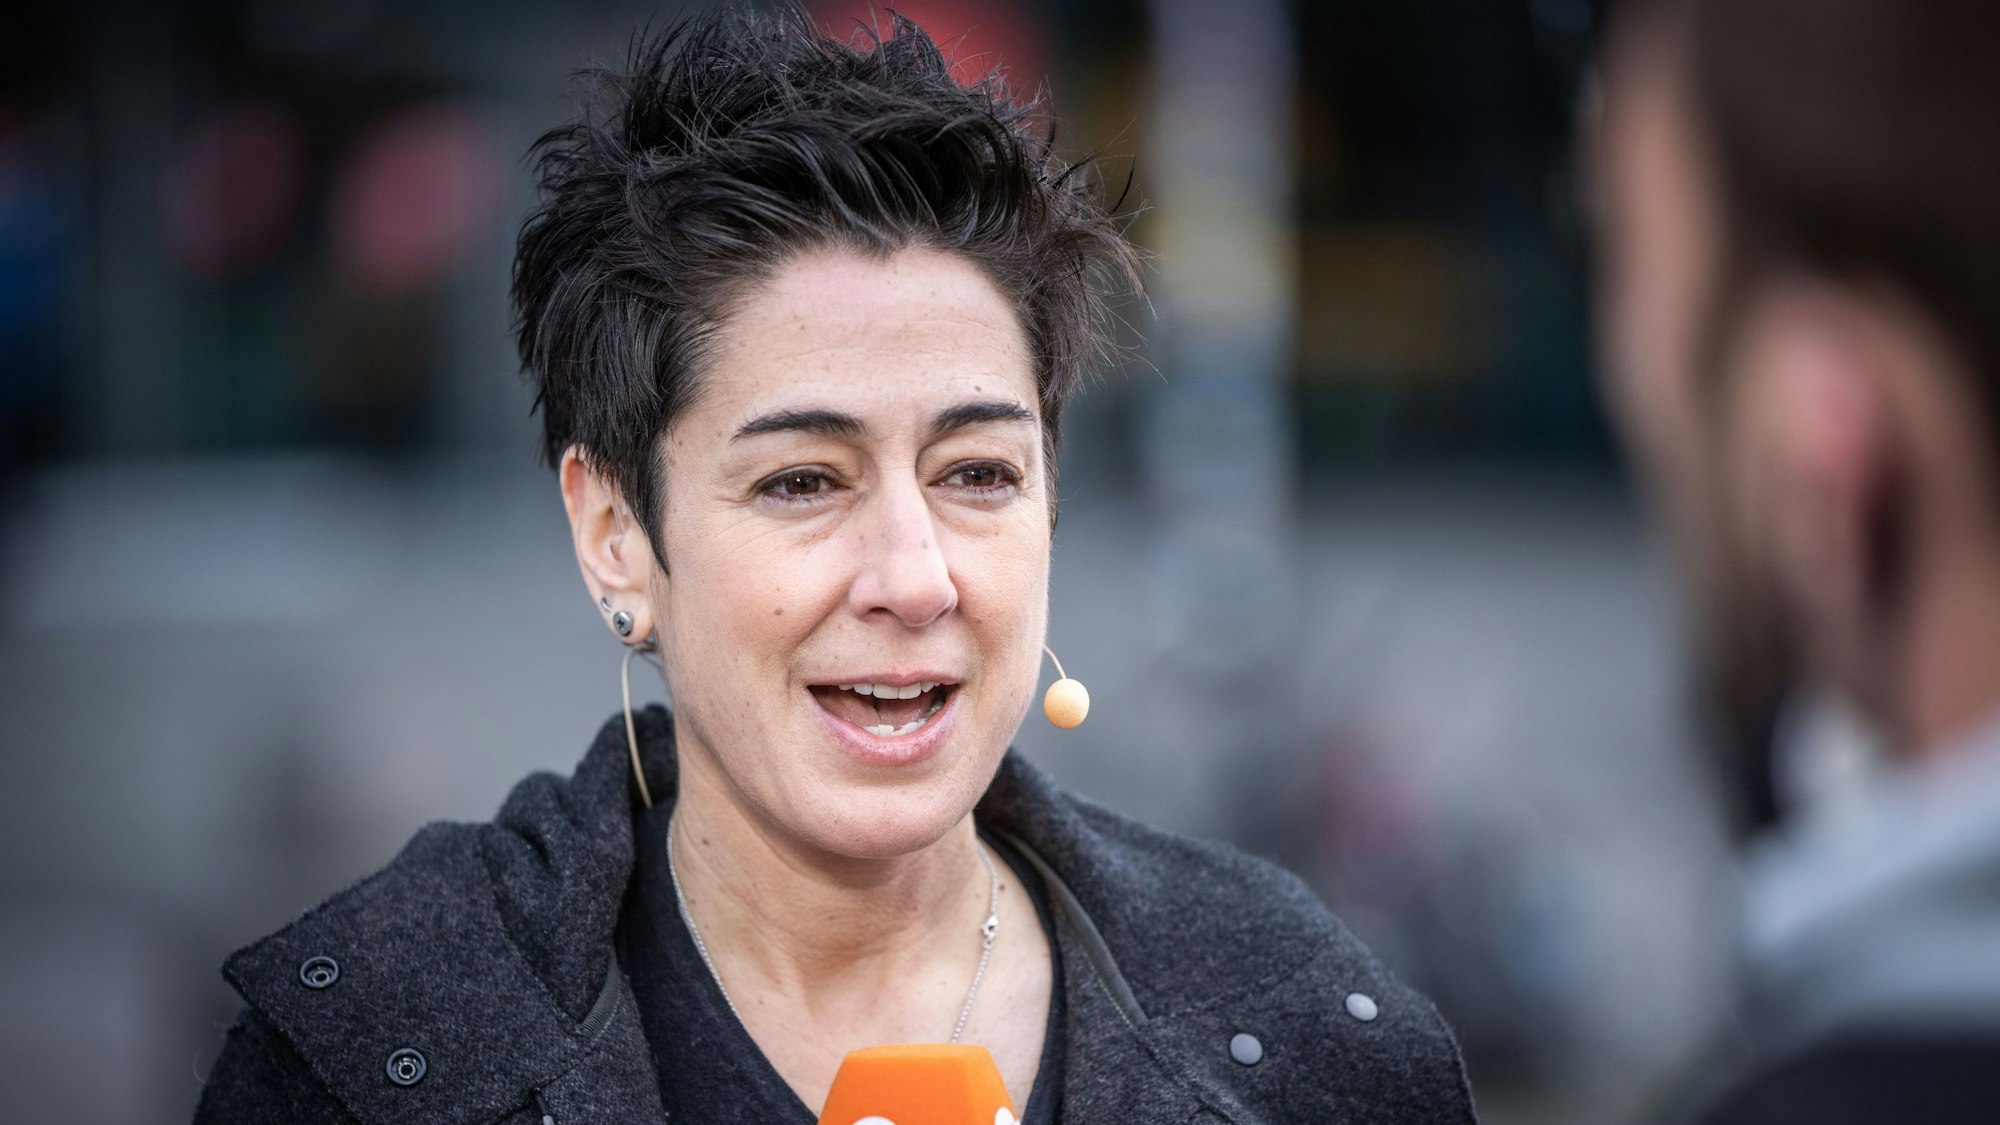 Moderatorin Dunja Hayali ist beim ZDF-"Morgenmagazin" vor Ort am Berliner Hauptbahnhof.